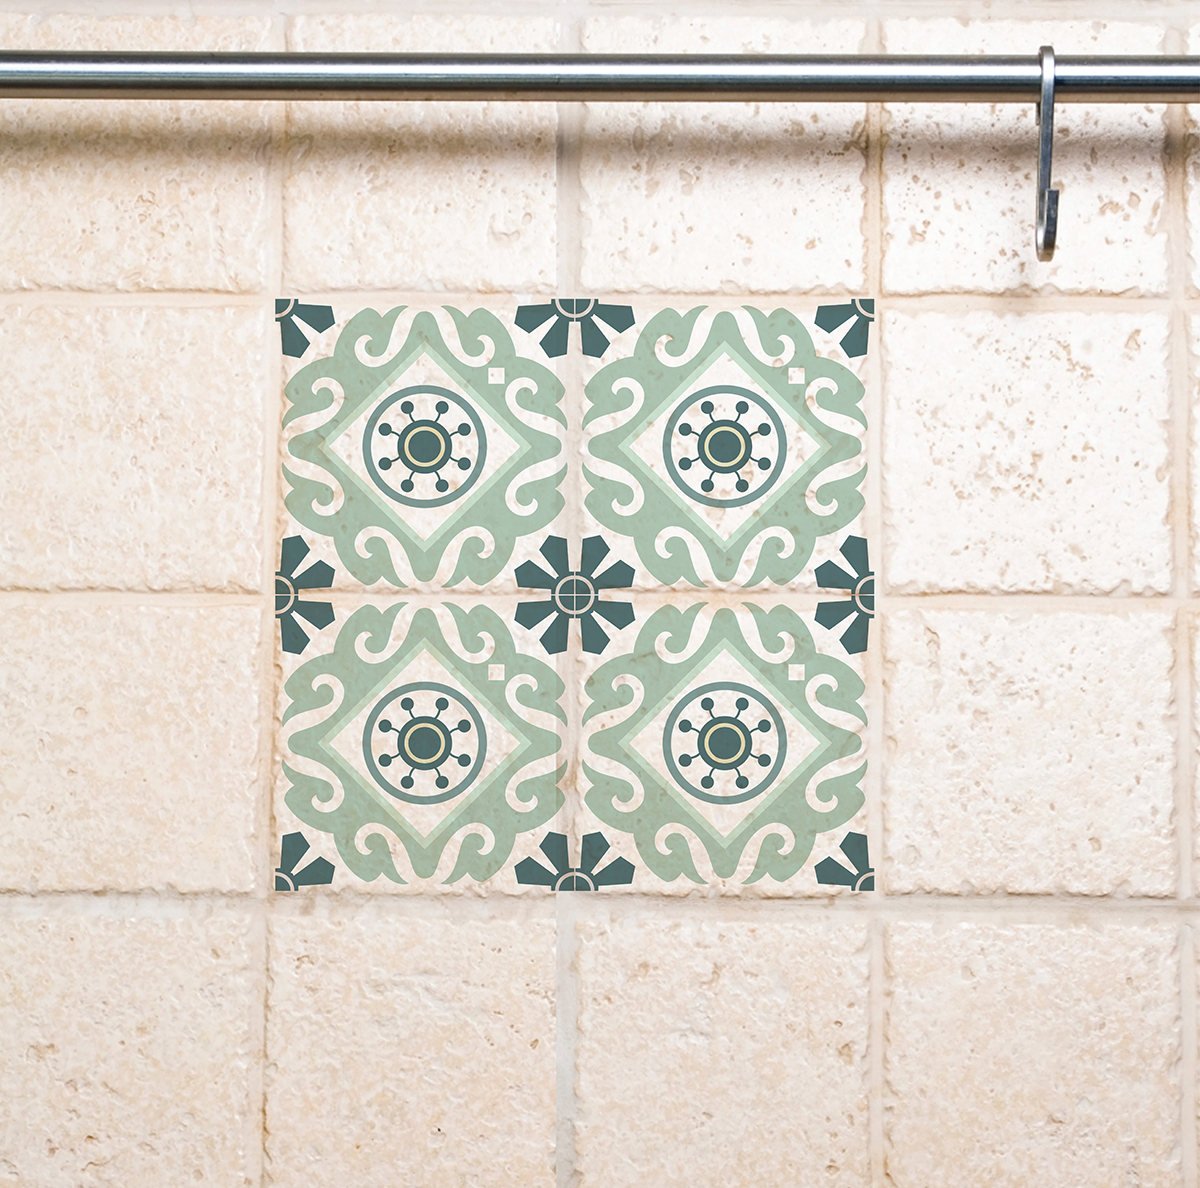 Tile Wall Decals Traditional Tiles Stickers Tiles Decals Tiles For Kitchen Backsplash Bathroom Design 211 5bddd2ed 